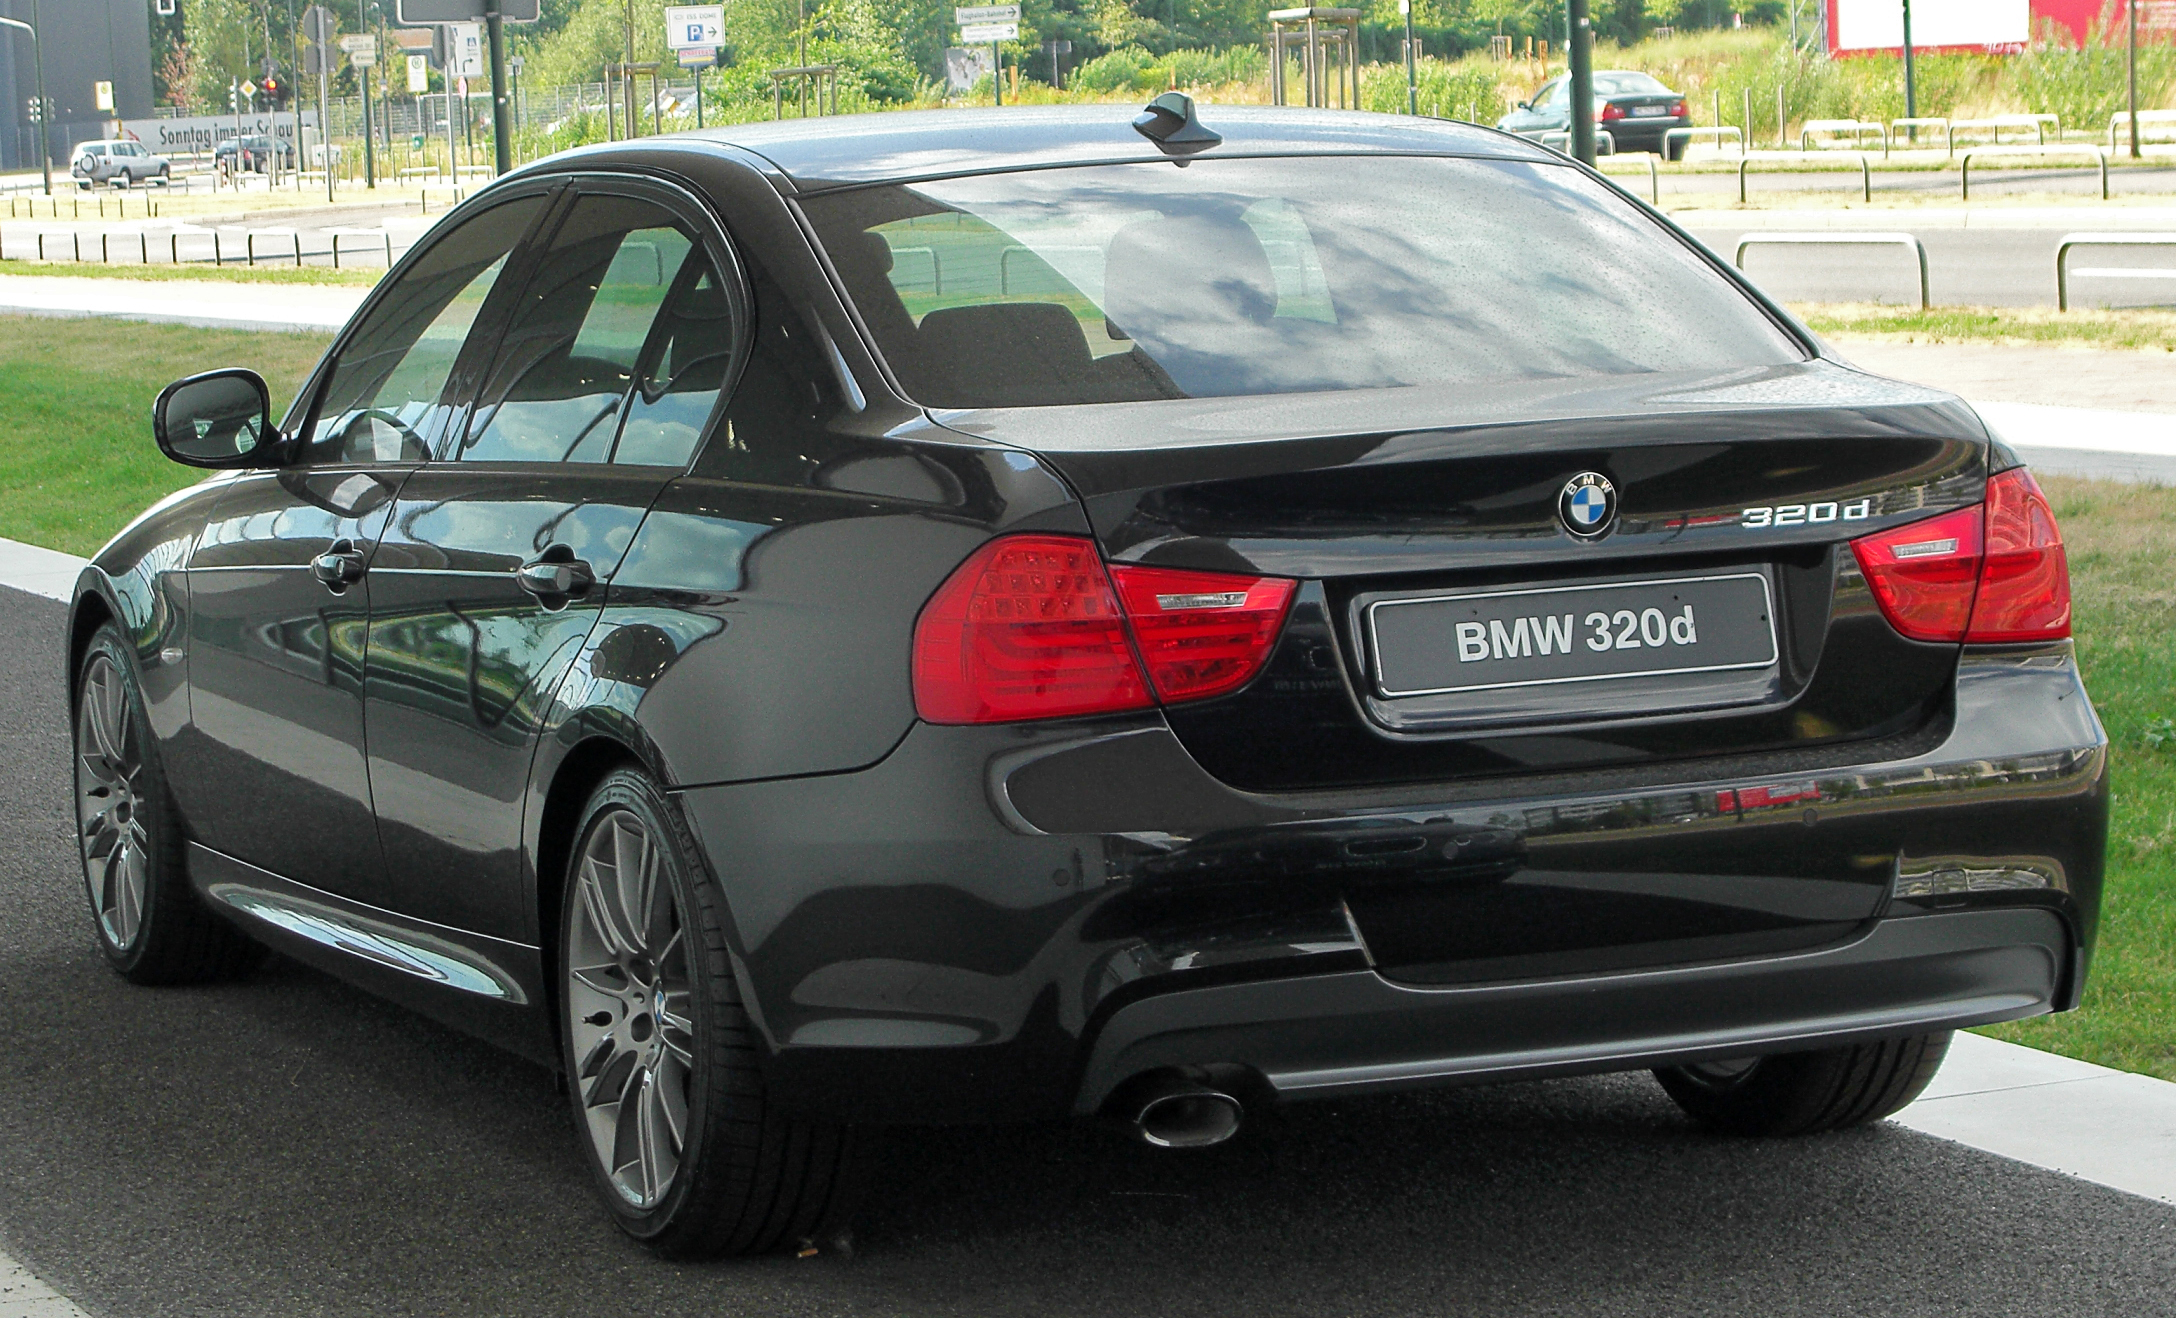 BMW 320d Edition Sport (E90) Facelift rear 20100724